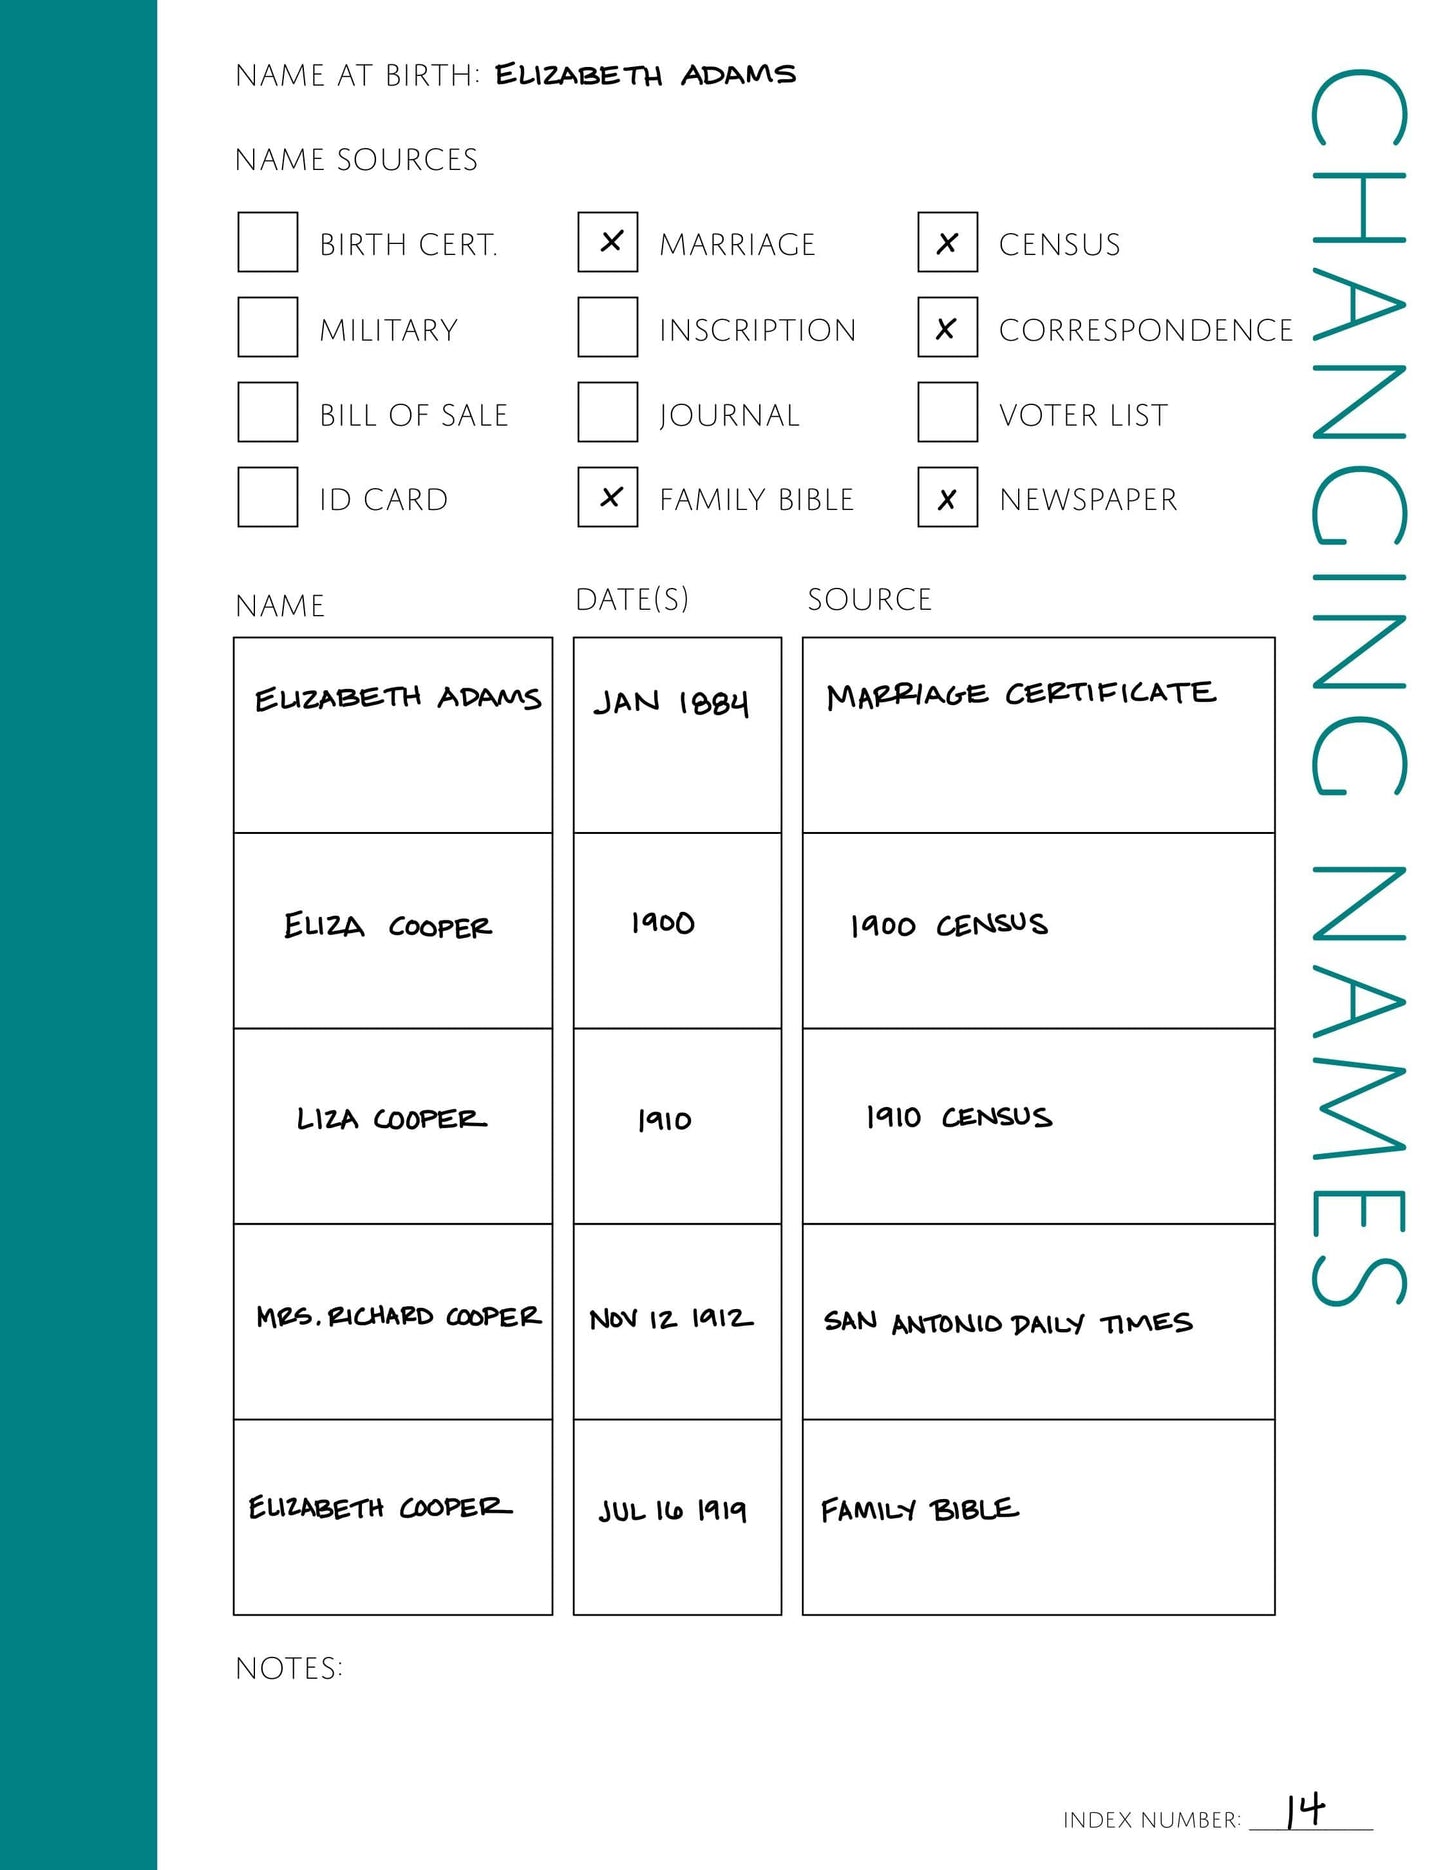 Changing Names Page: Printable Genealogy Form (Digital Download)